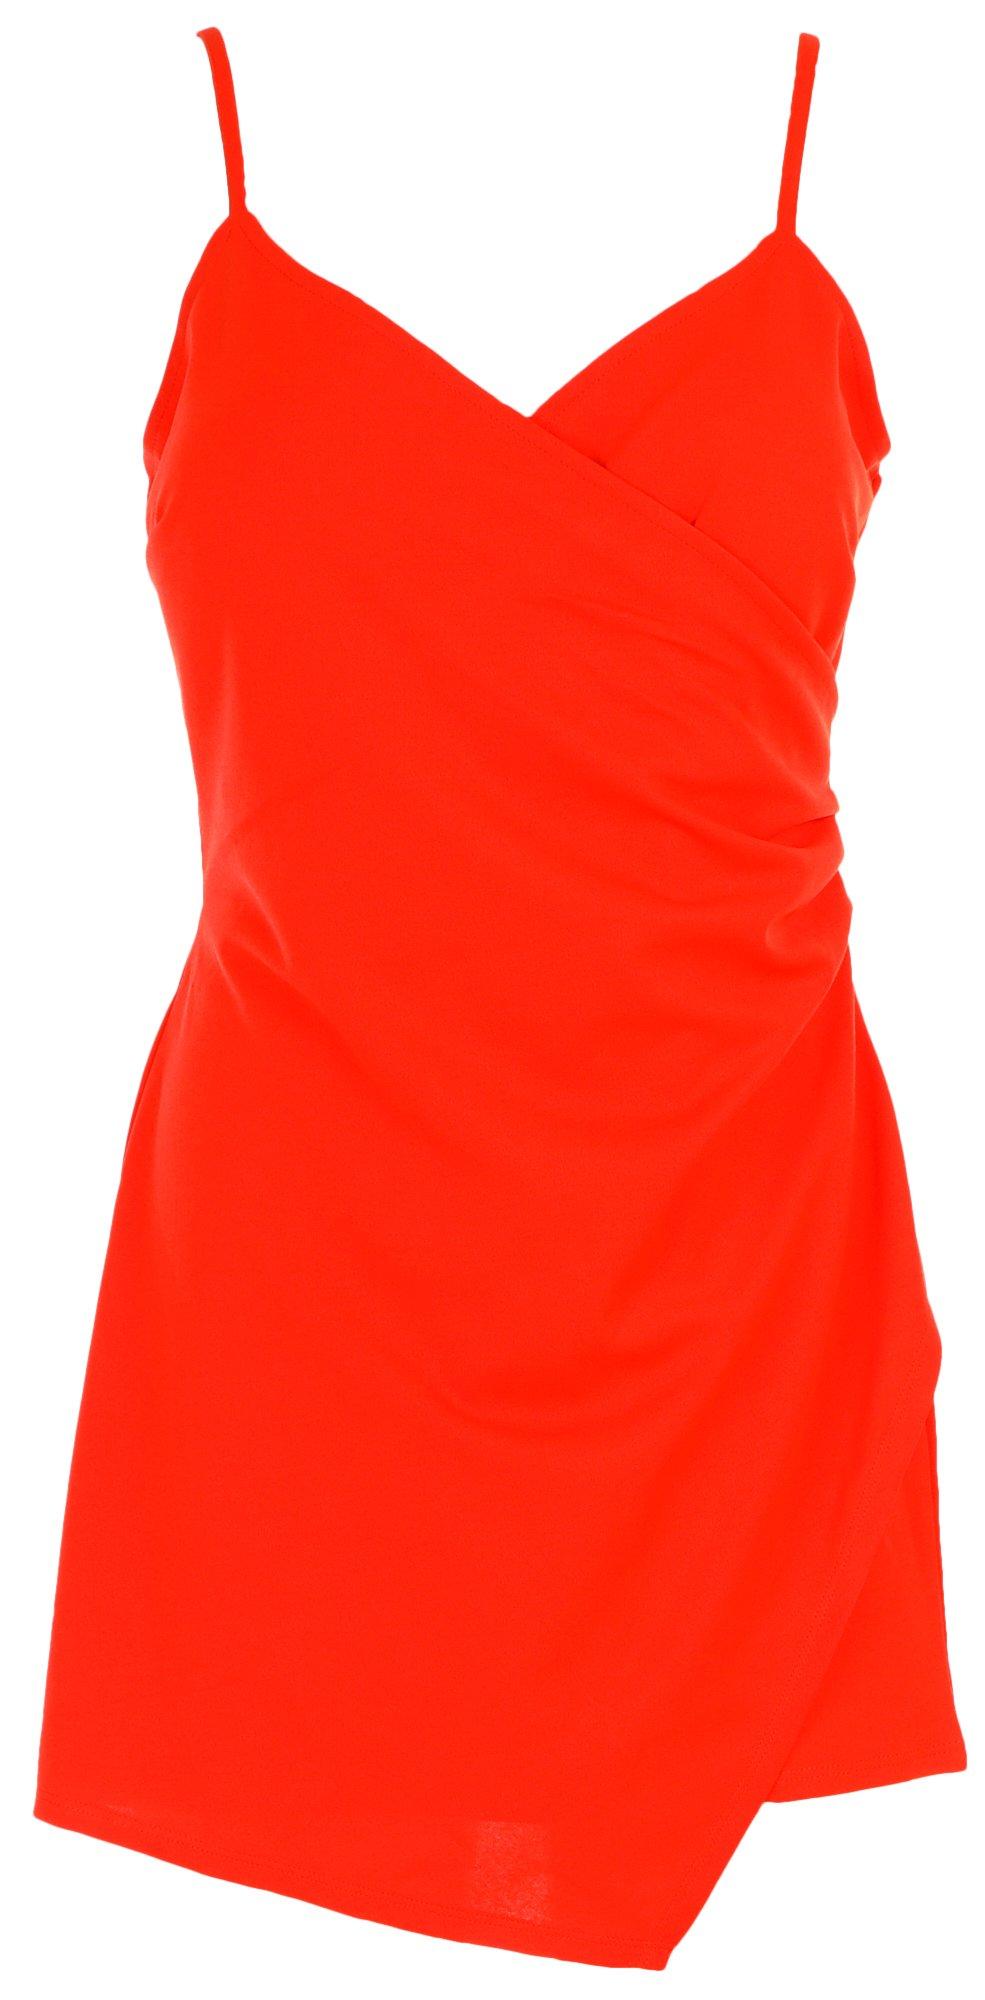 No Boundaries Juniors' Sleeveless Plaid Dress for Sale in Orange Park, FL -  OfferUp